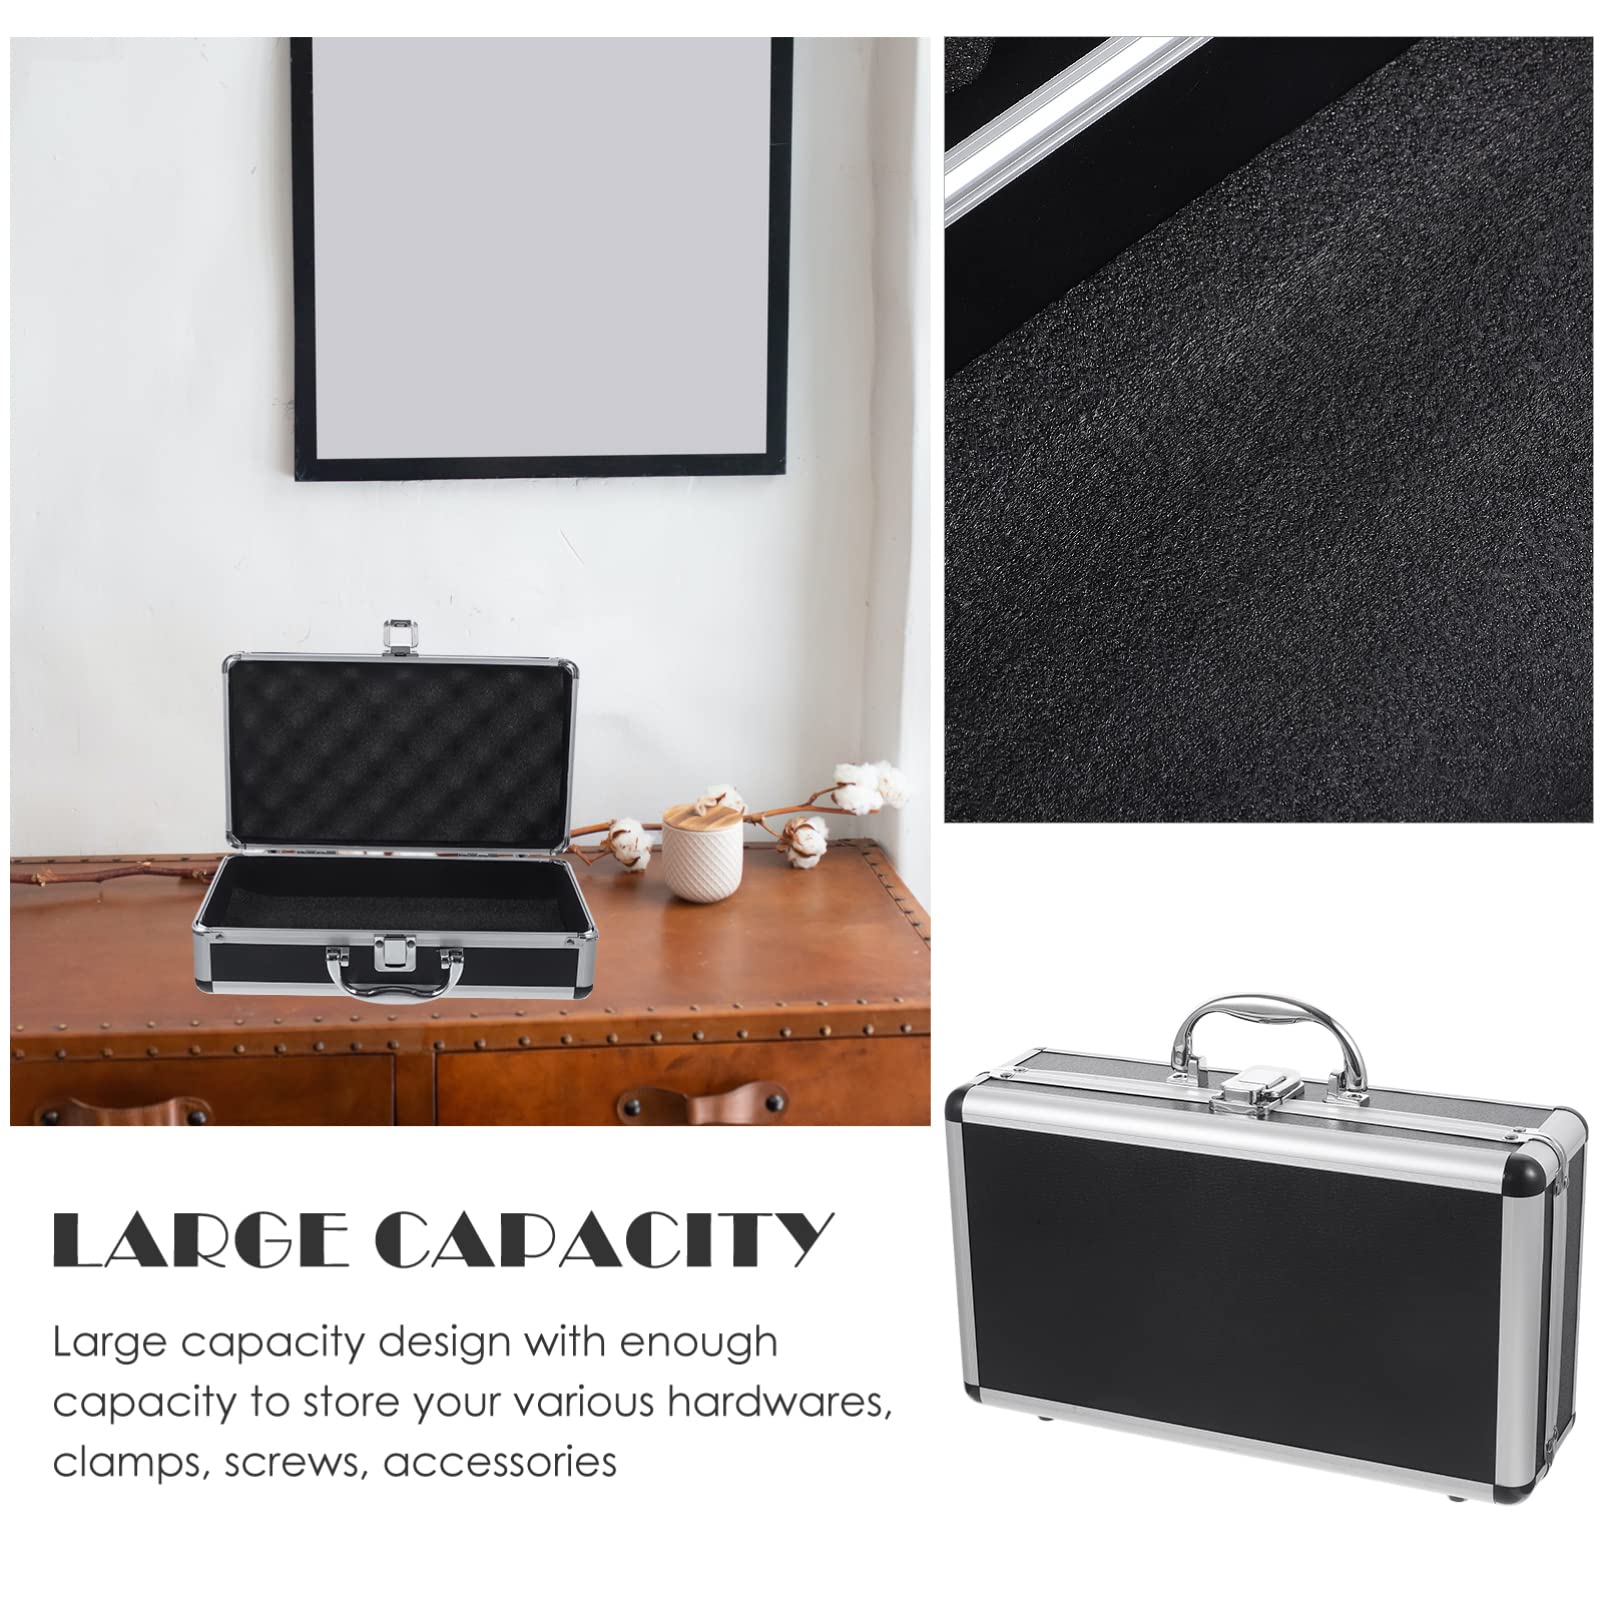 ERINGOGO Aluminum Briefcase - 11.8 Inch Hard Laptop Briefcases with Lock, Multifunctional Case